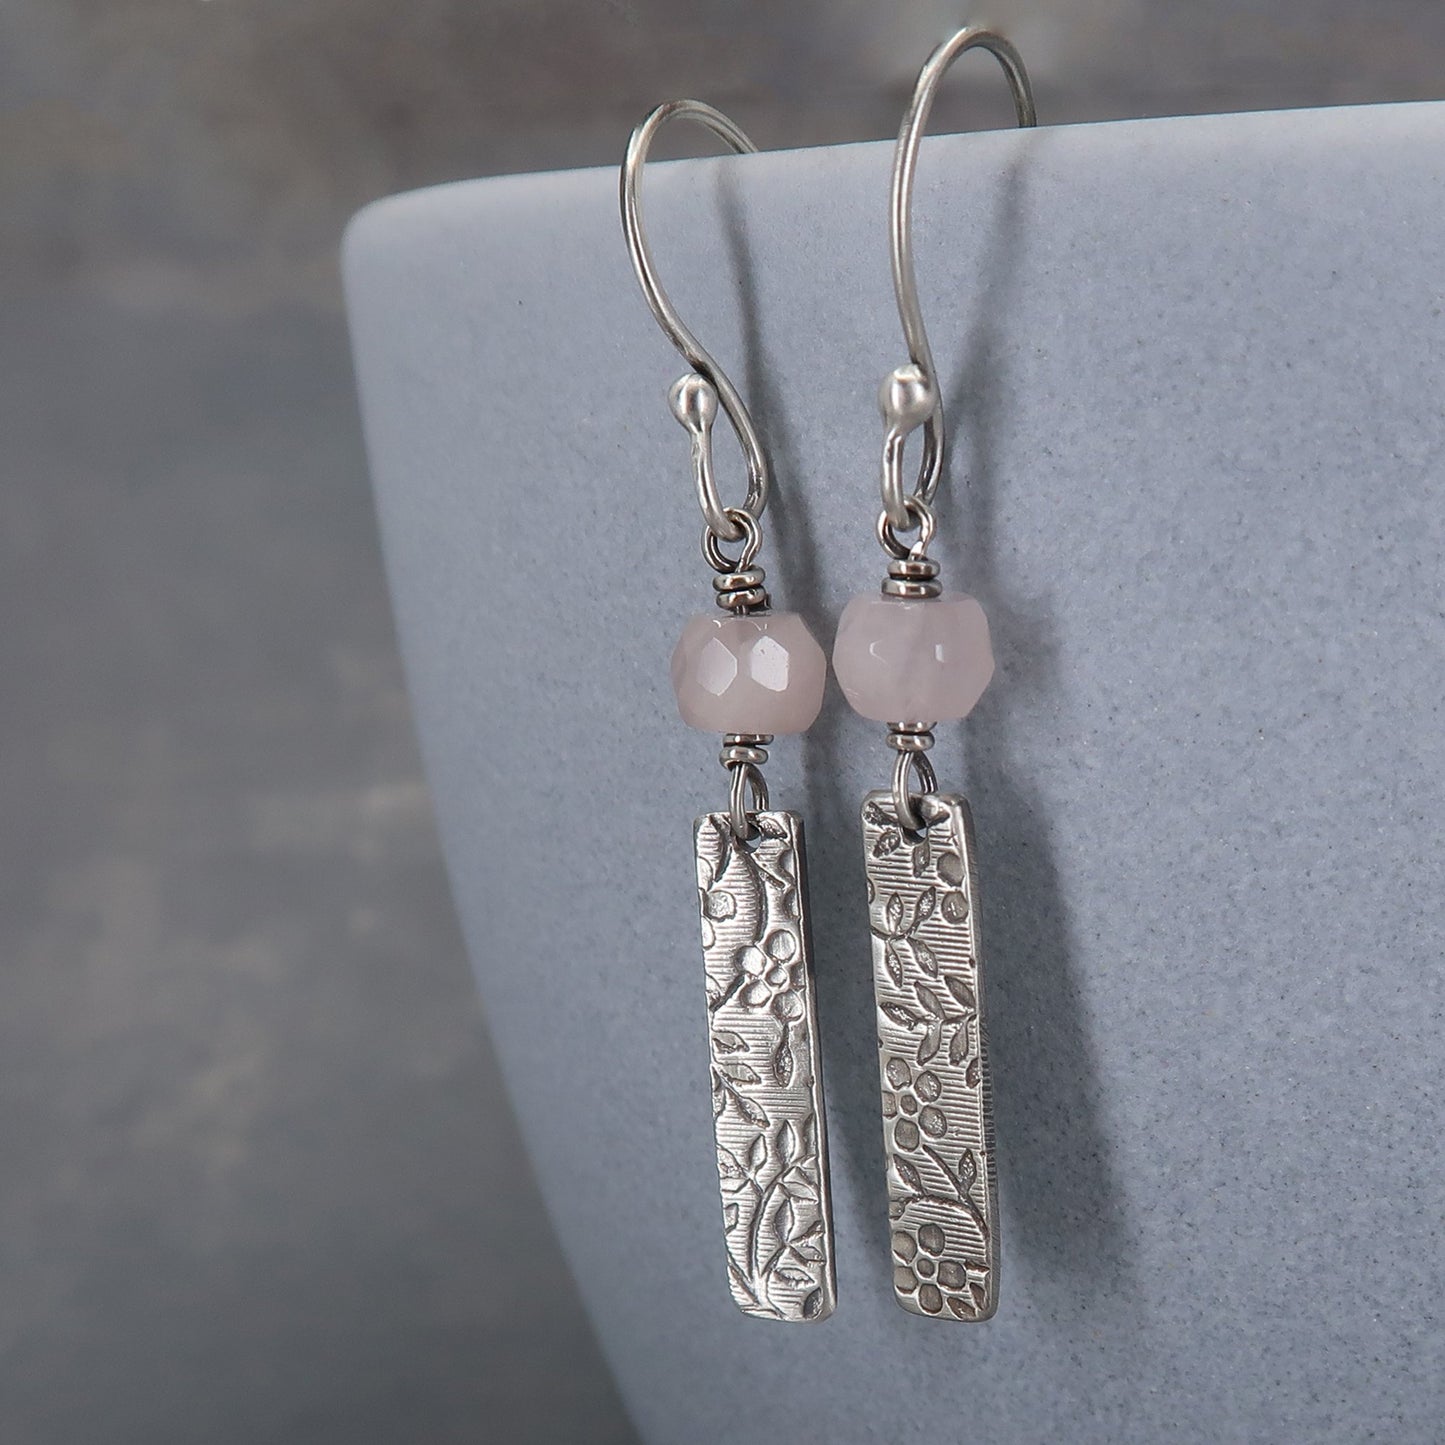 Rose quartz and dangle earrings